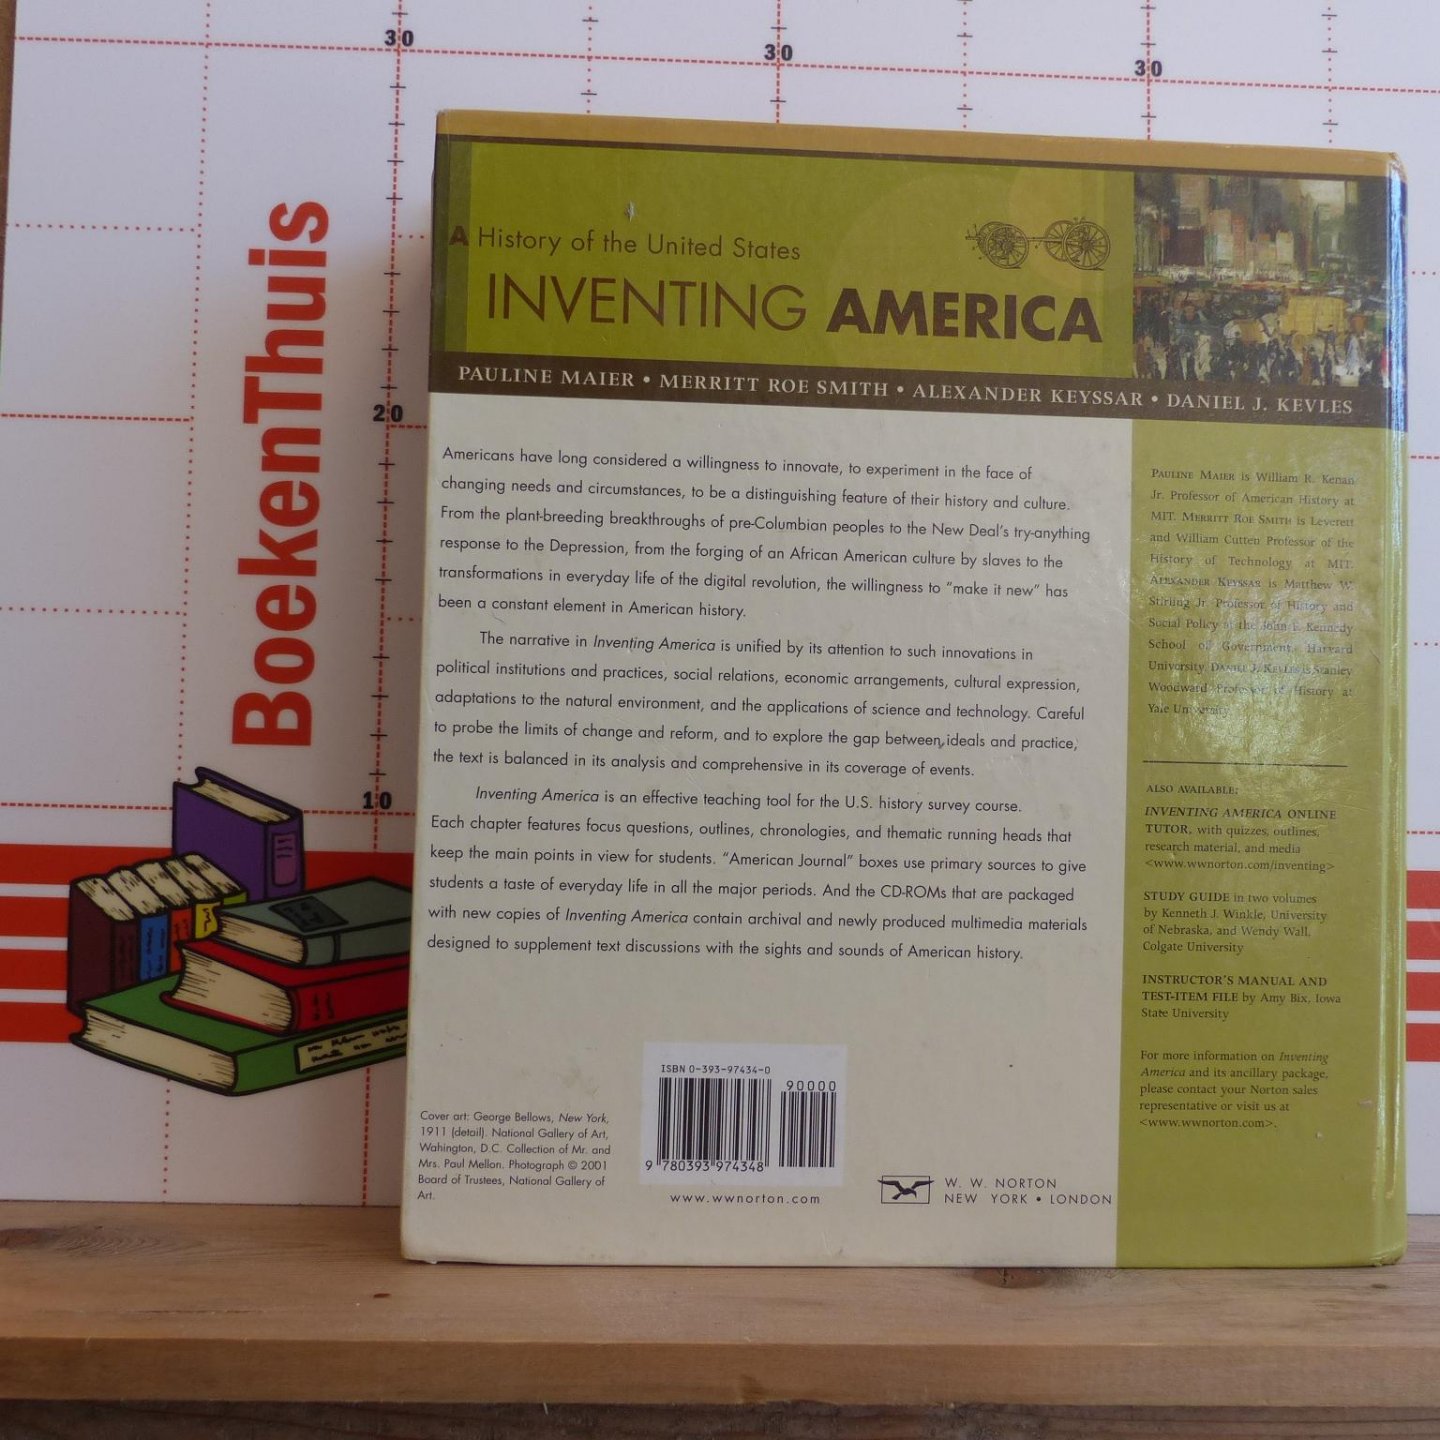 Maier, Pauline - Roe Smith, Merrit - Keyssar, Alexander - Kevles, Daniel J. - a history of the United States - inventing America